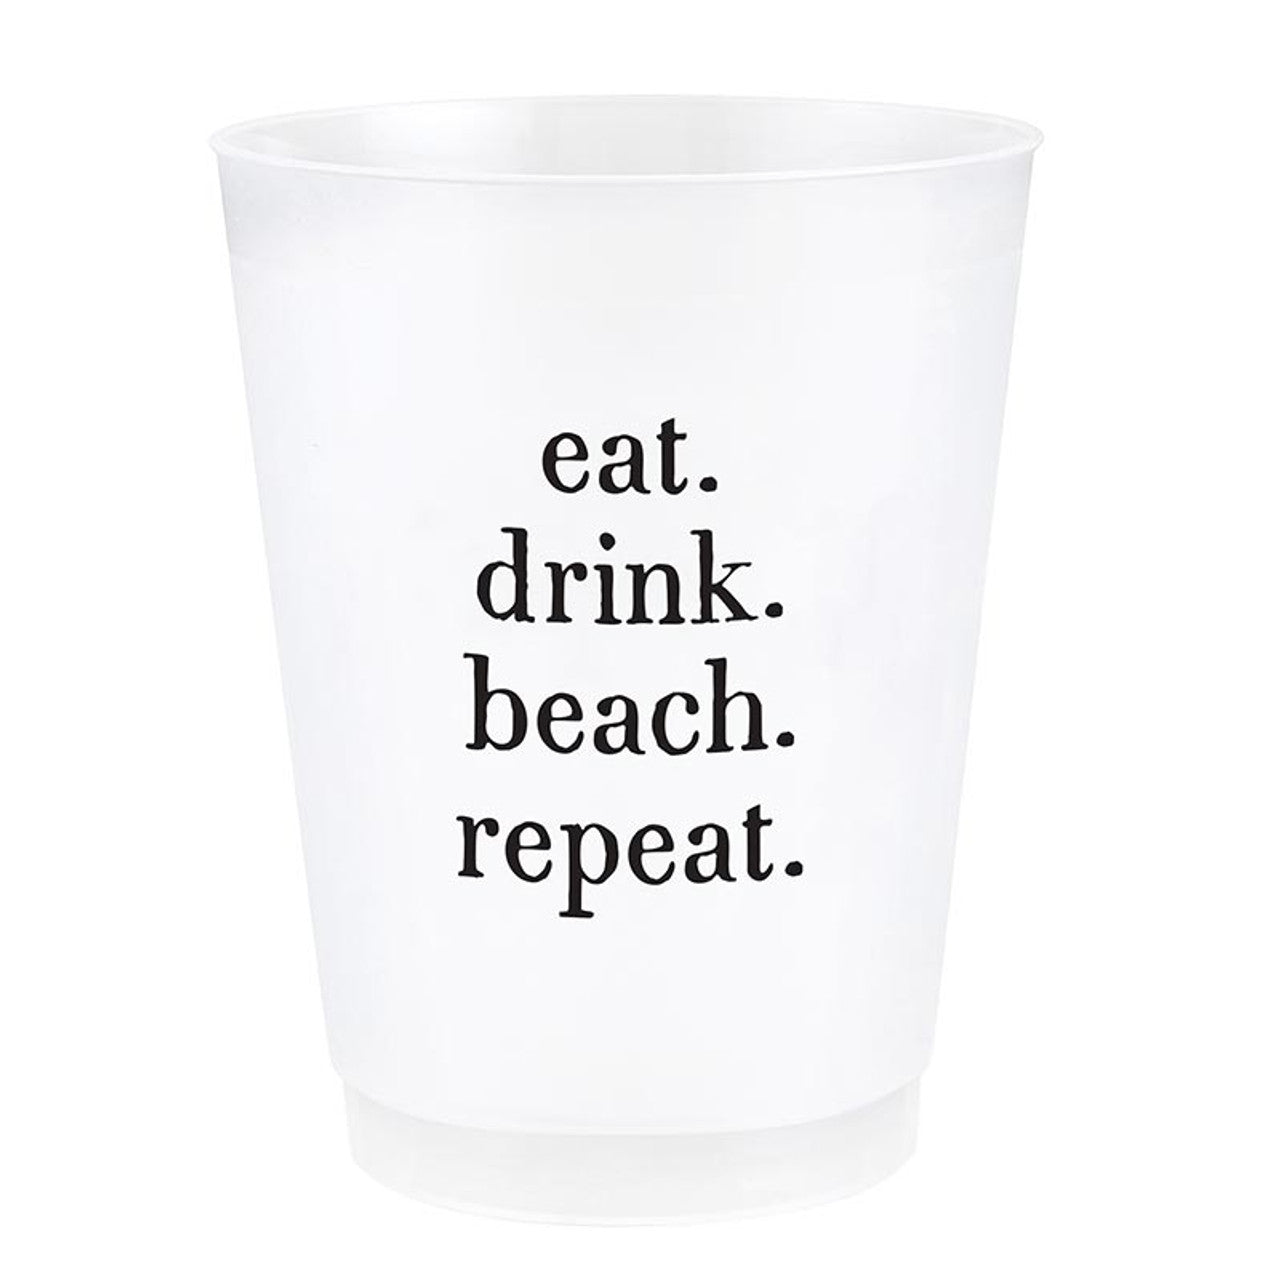 Santa Barbra Design Studio Frost Cups 8 Pack - Eat Drink Beach